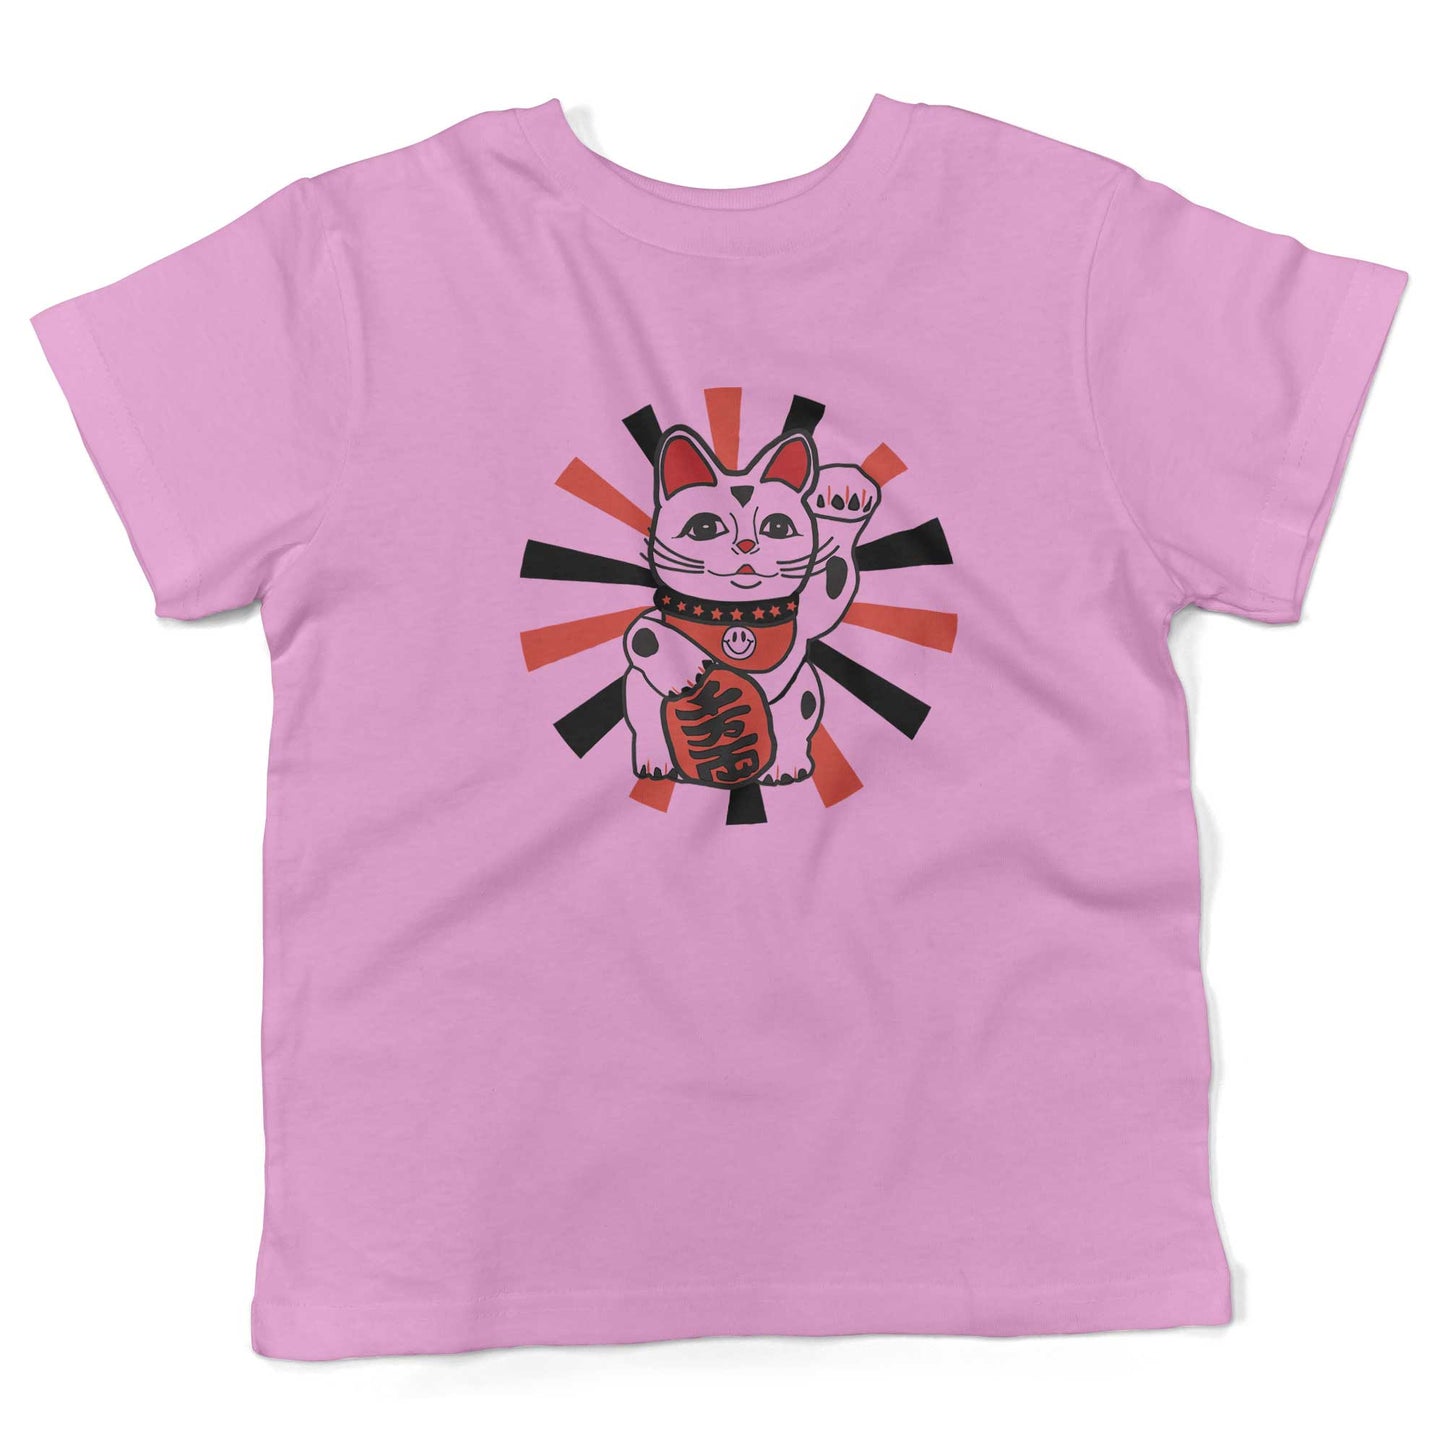 Japanese Lucky Cat Toddler Shirt-Organic Pink-2T